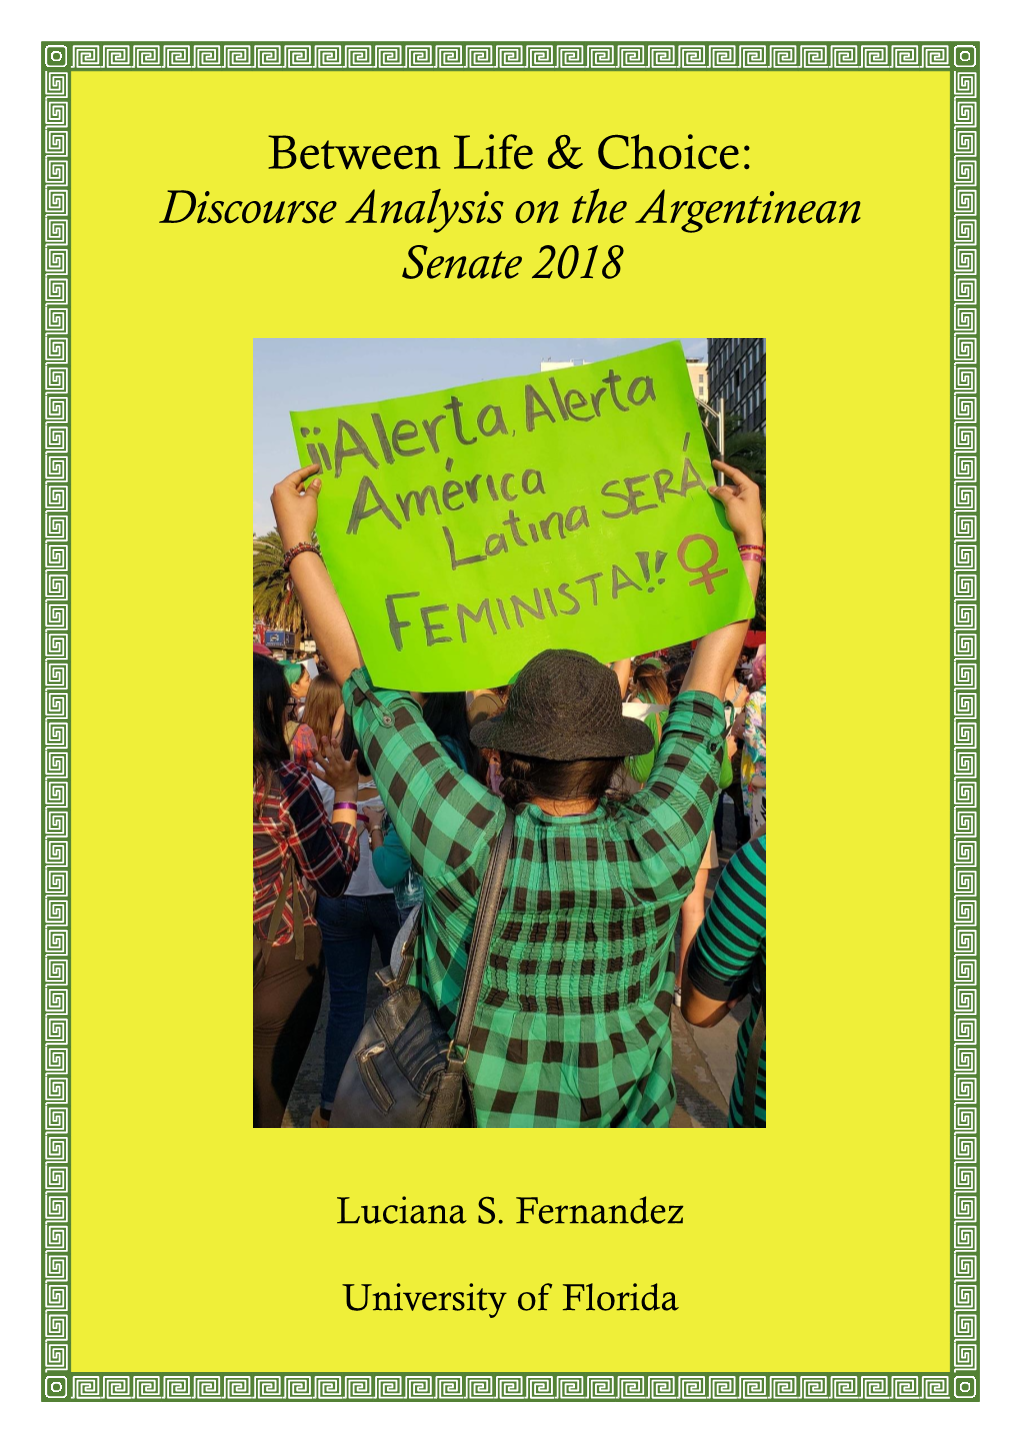 Discourse Analysis on the Argentinean Senate 2018